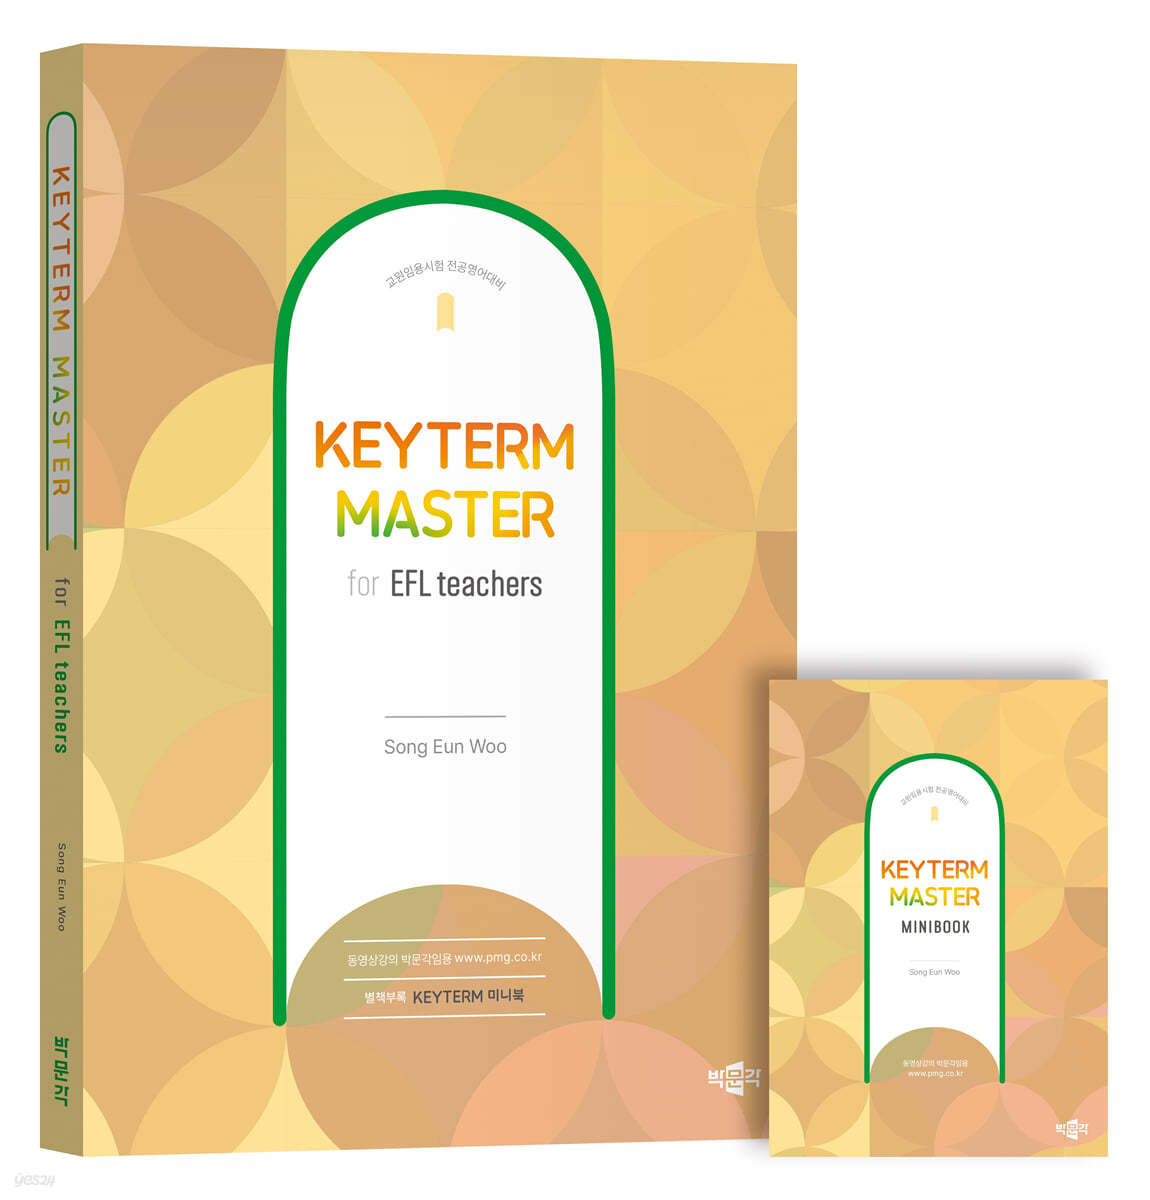 Keyterm Master 키텀 마스터 for EFL teachers